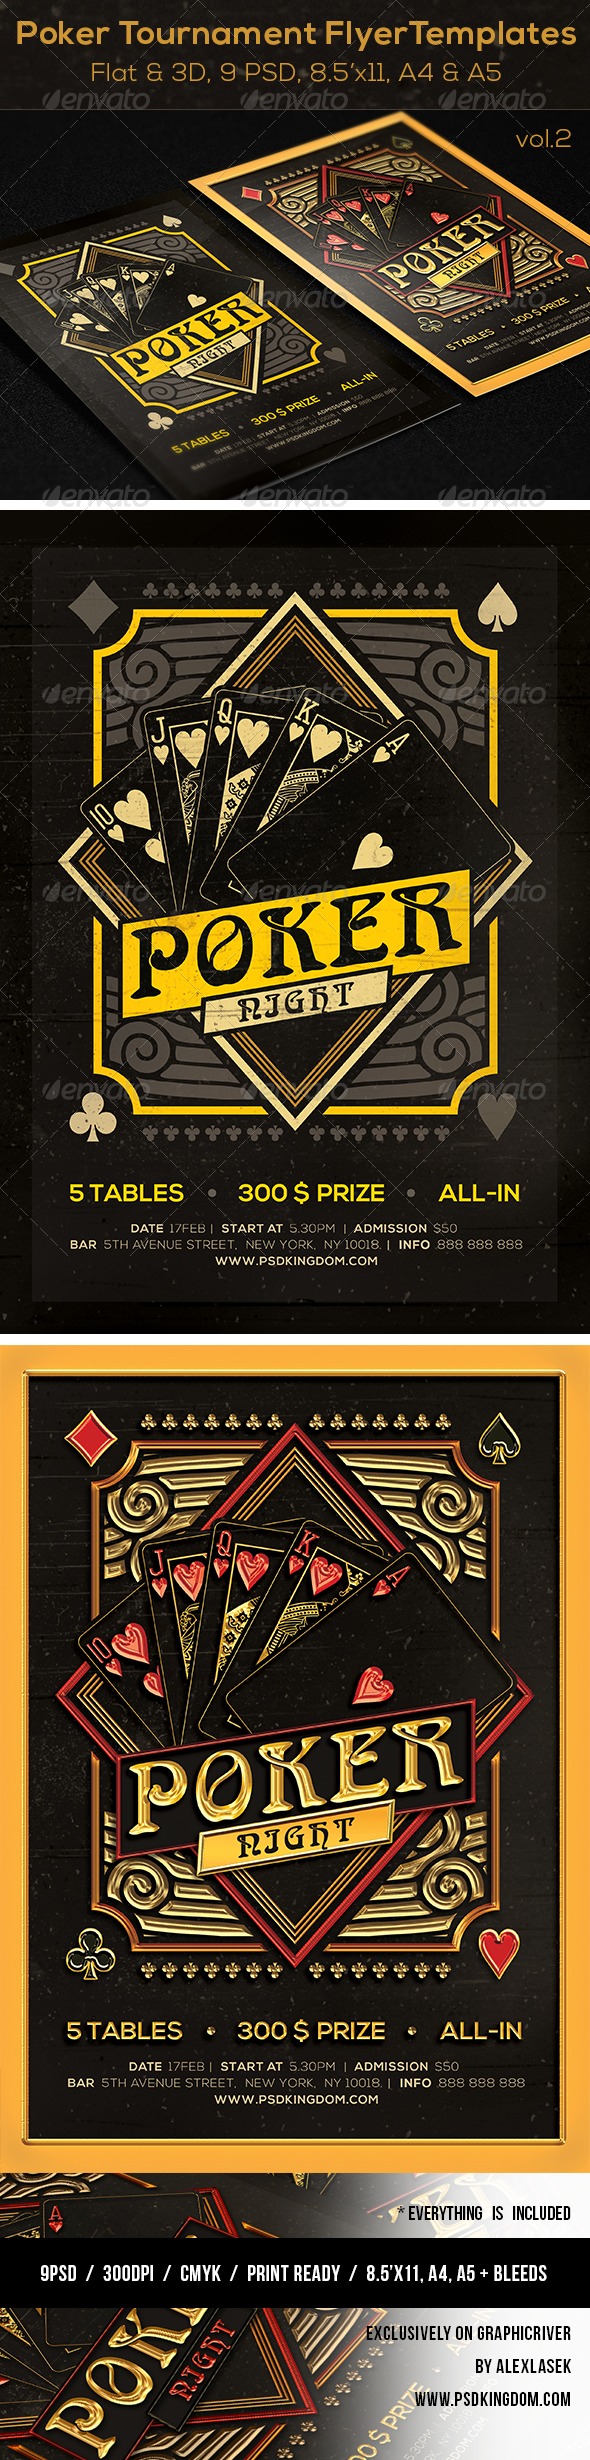 Poker Magazine Ad, Poster or Flyer - Flat & 3D v2 (Sports)